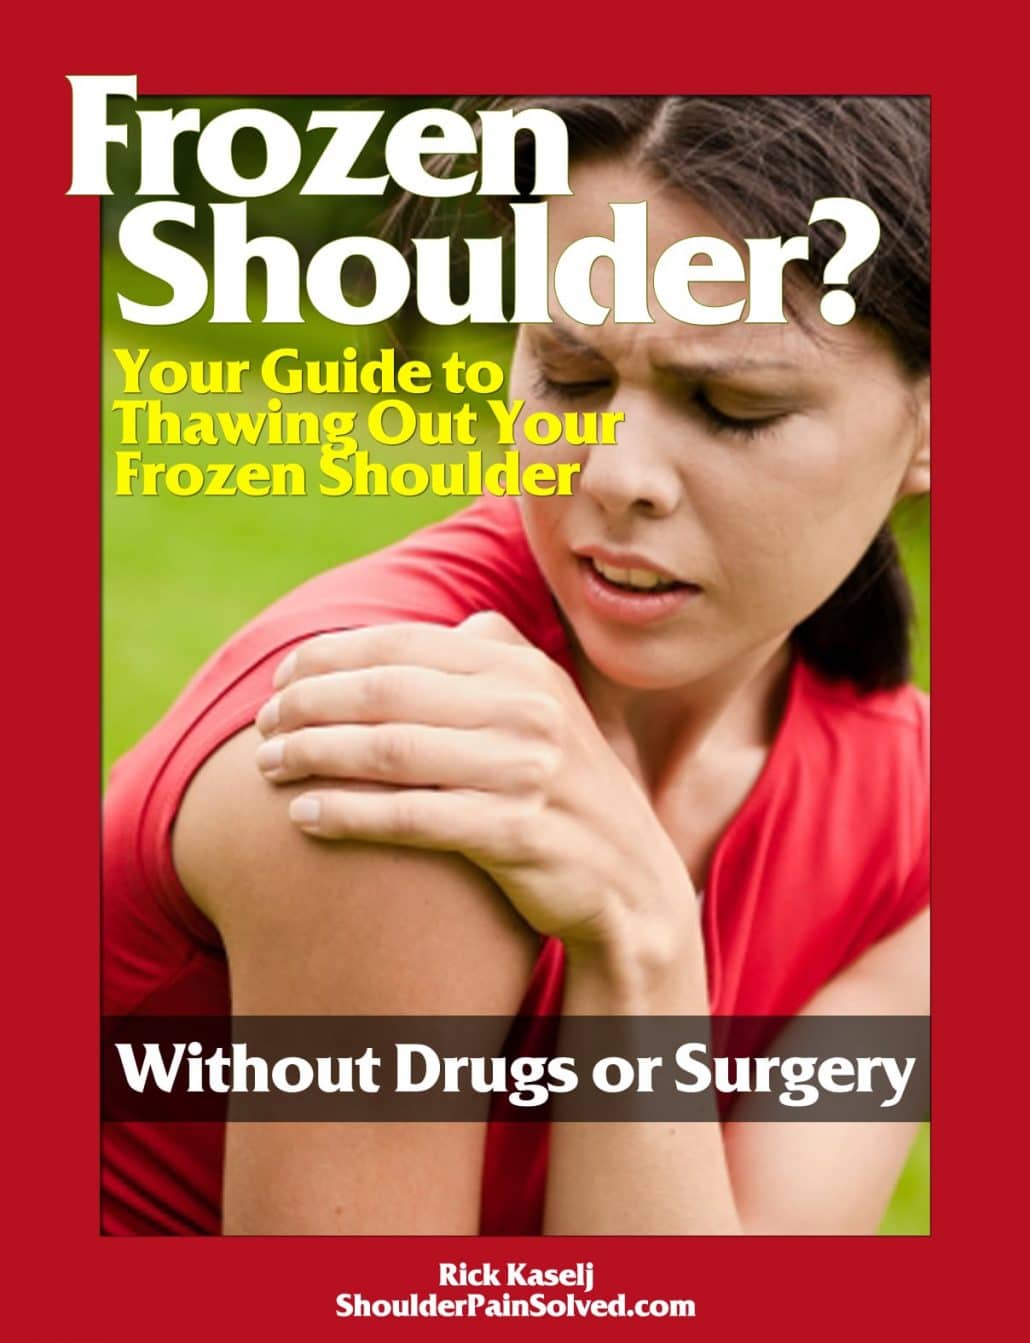 What causes frozen shoulder